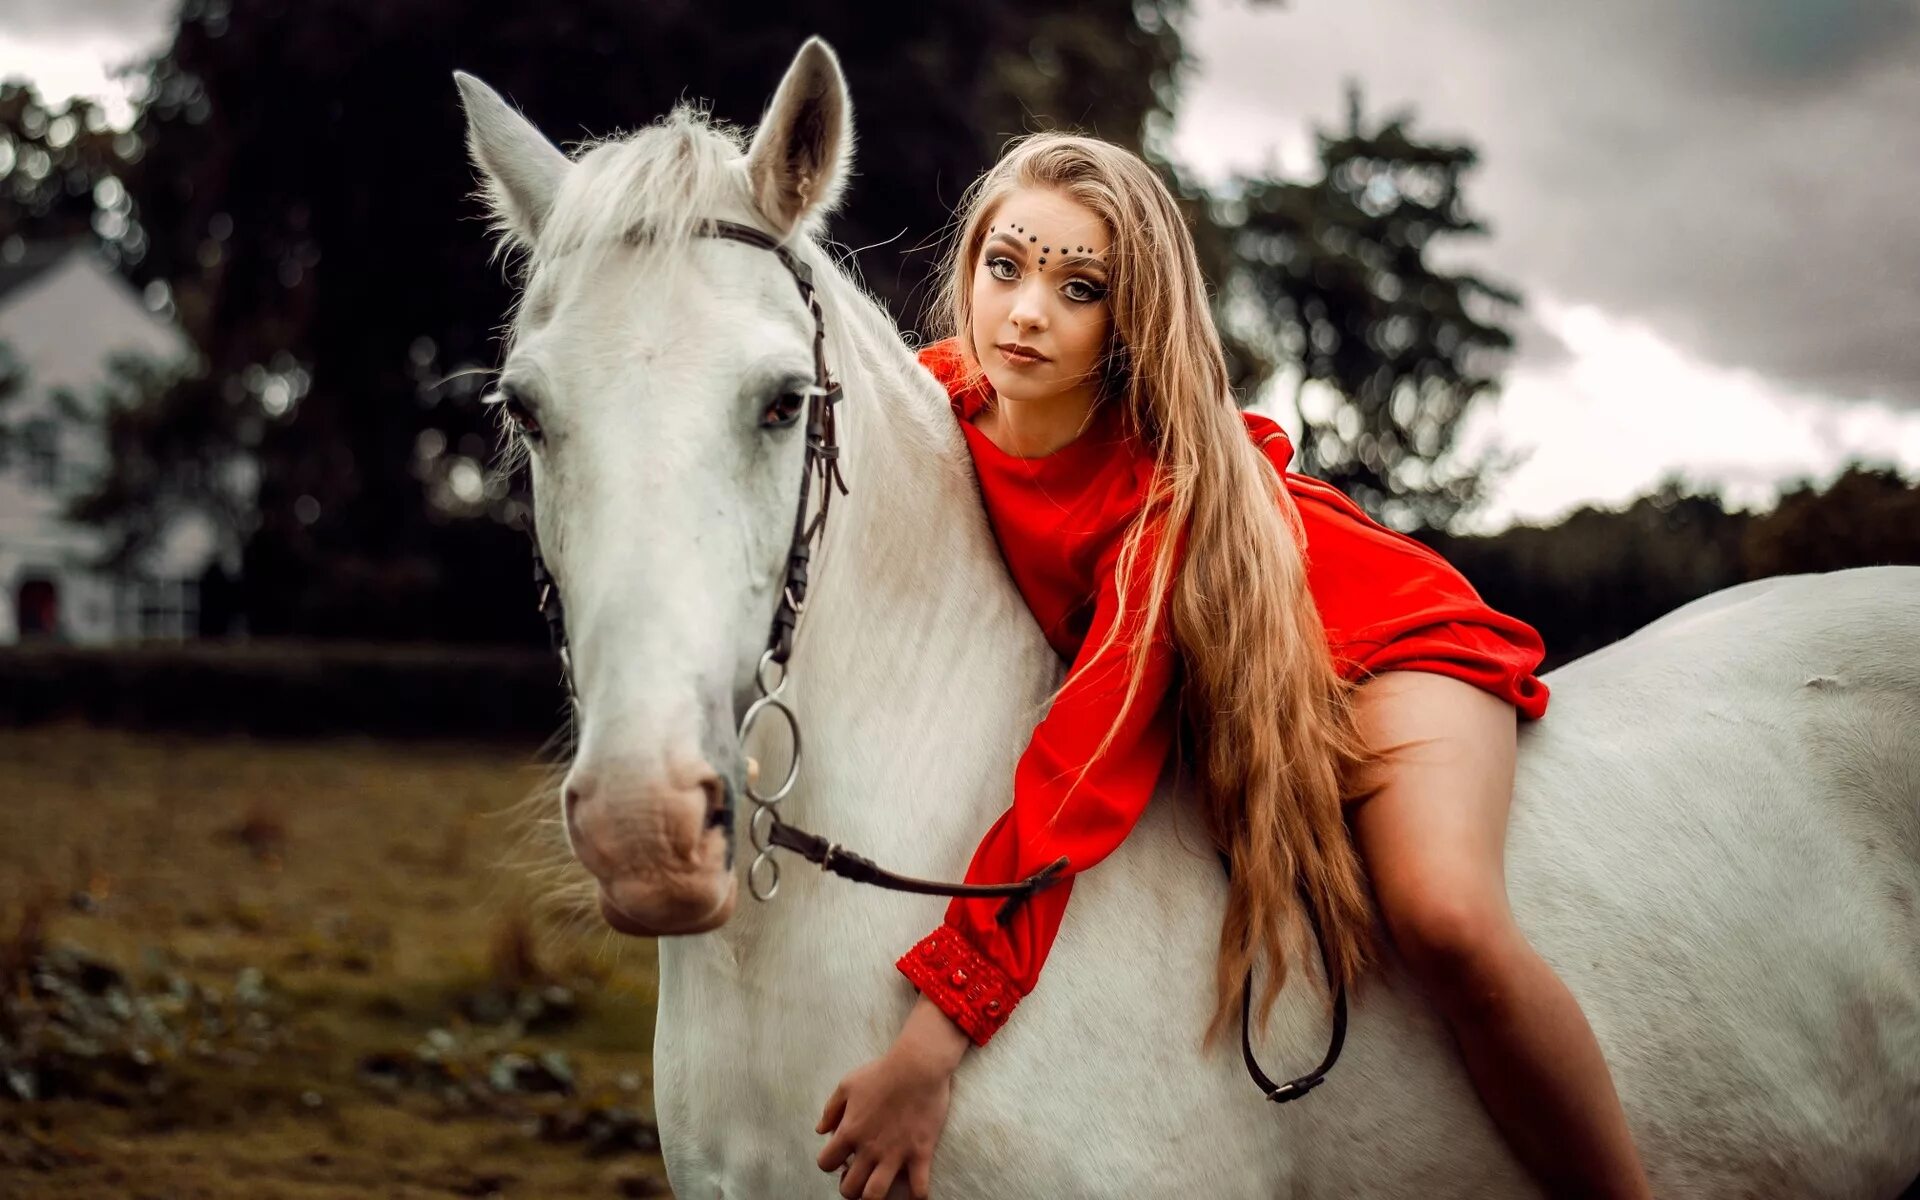 Женщина на лошади. Девушка на коне. Девушка с лошадью. Фотосессия с лошадьми.